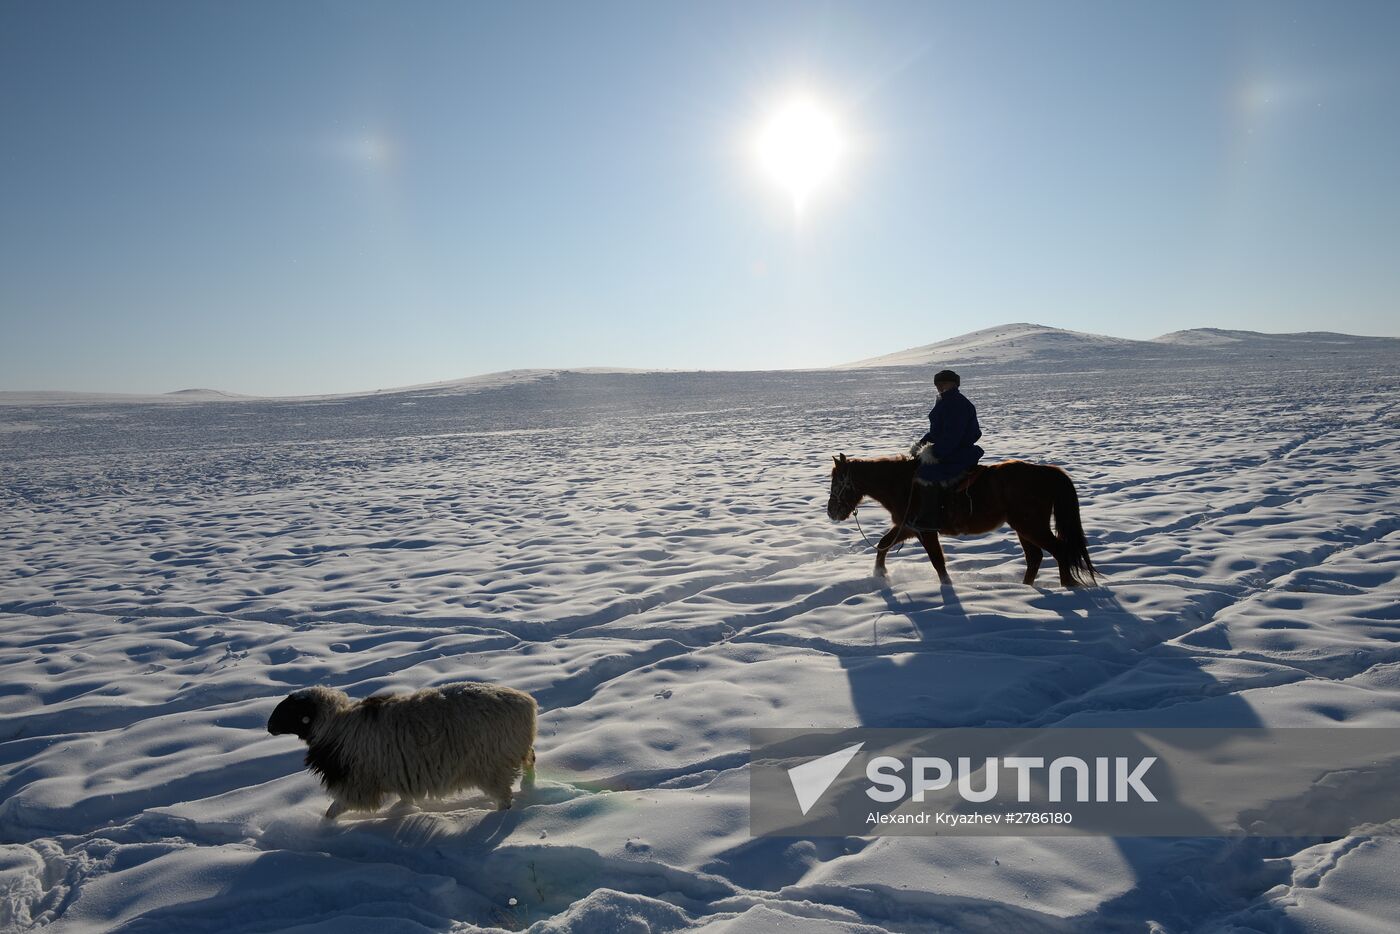 Winter shepherd camps in Republic of Tuva